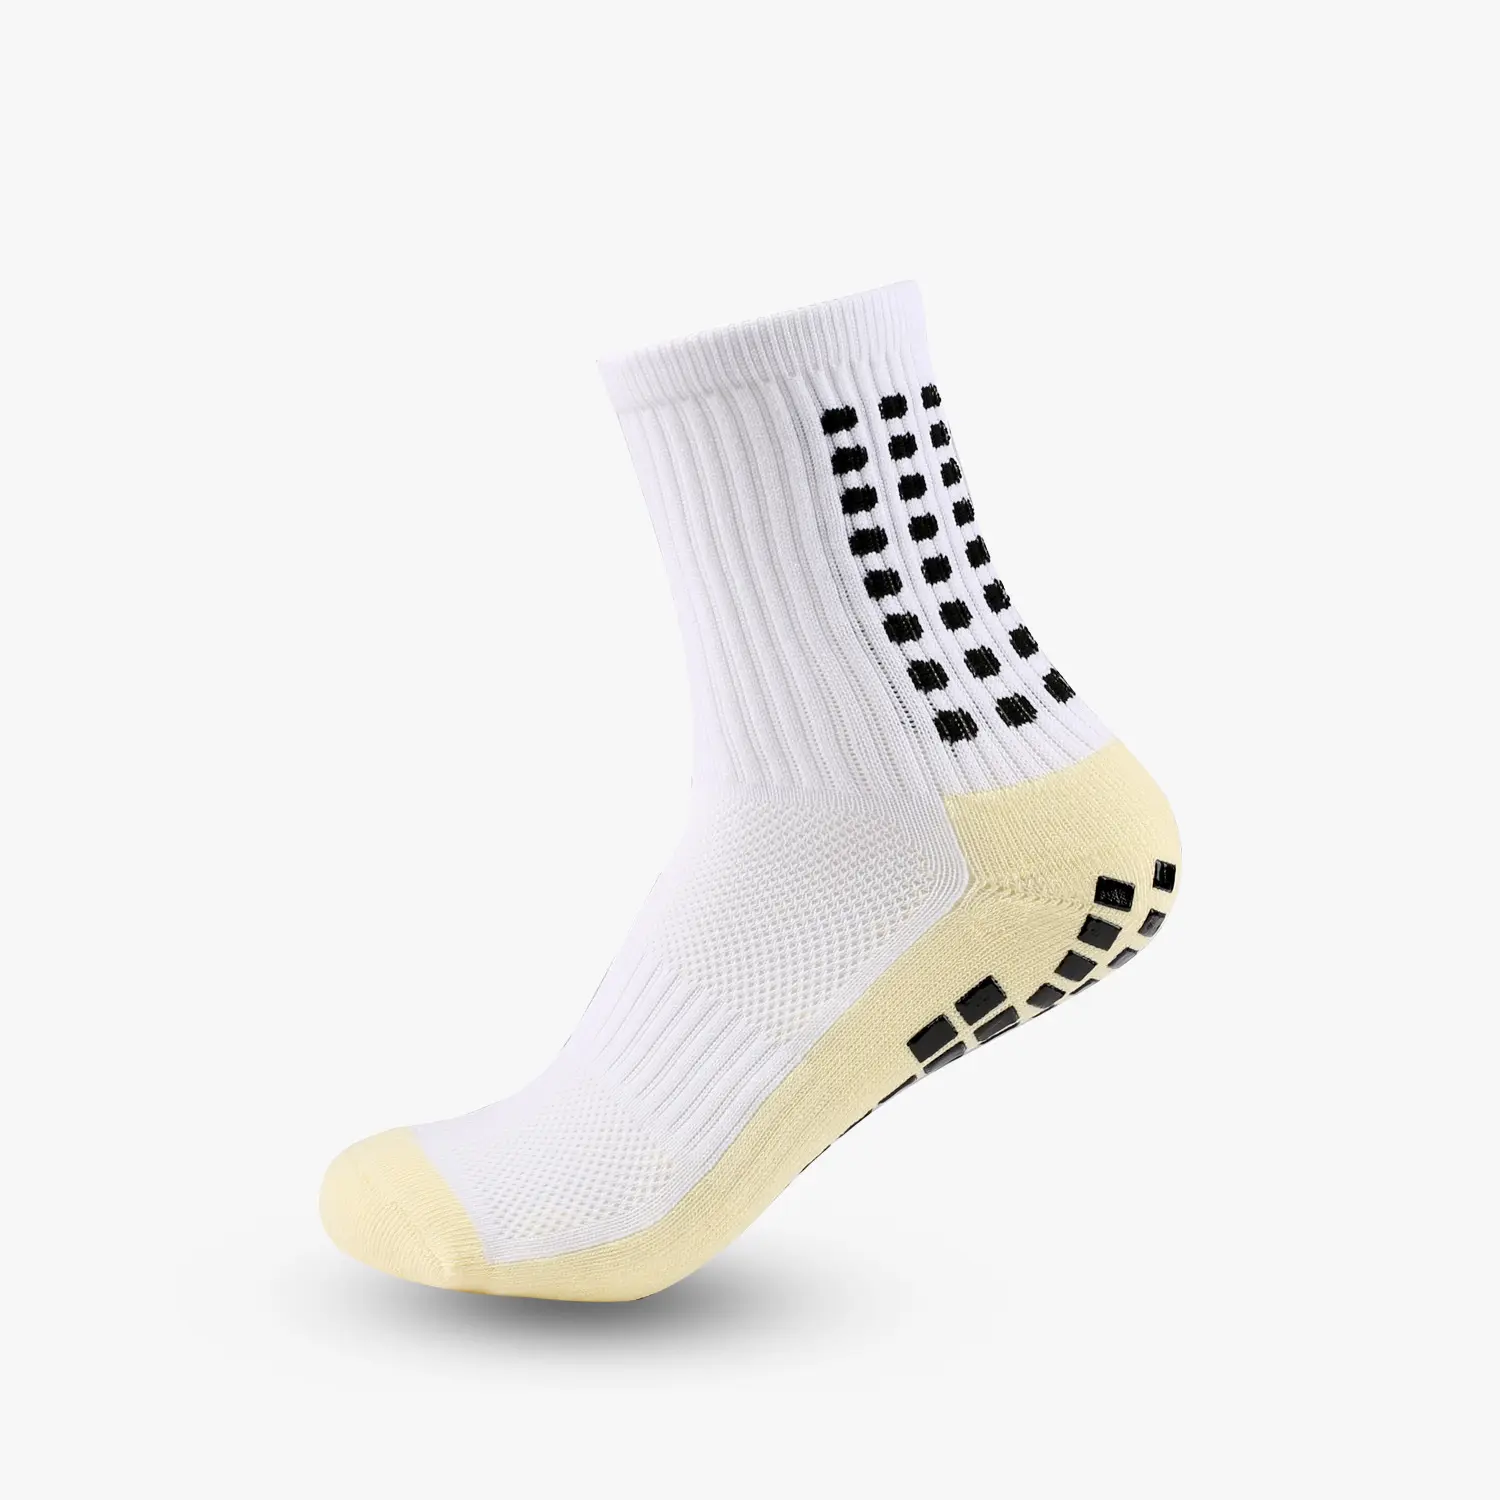 2022 New Cheap Wholesales Men Women Short Sport Soccer Socks White Black Running Cycling Silicone Grip for socks